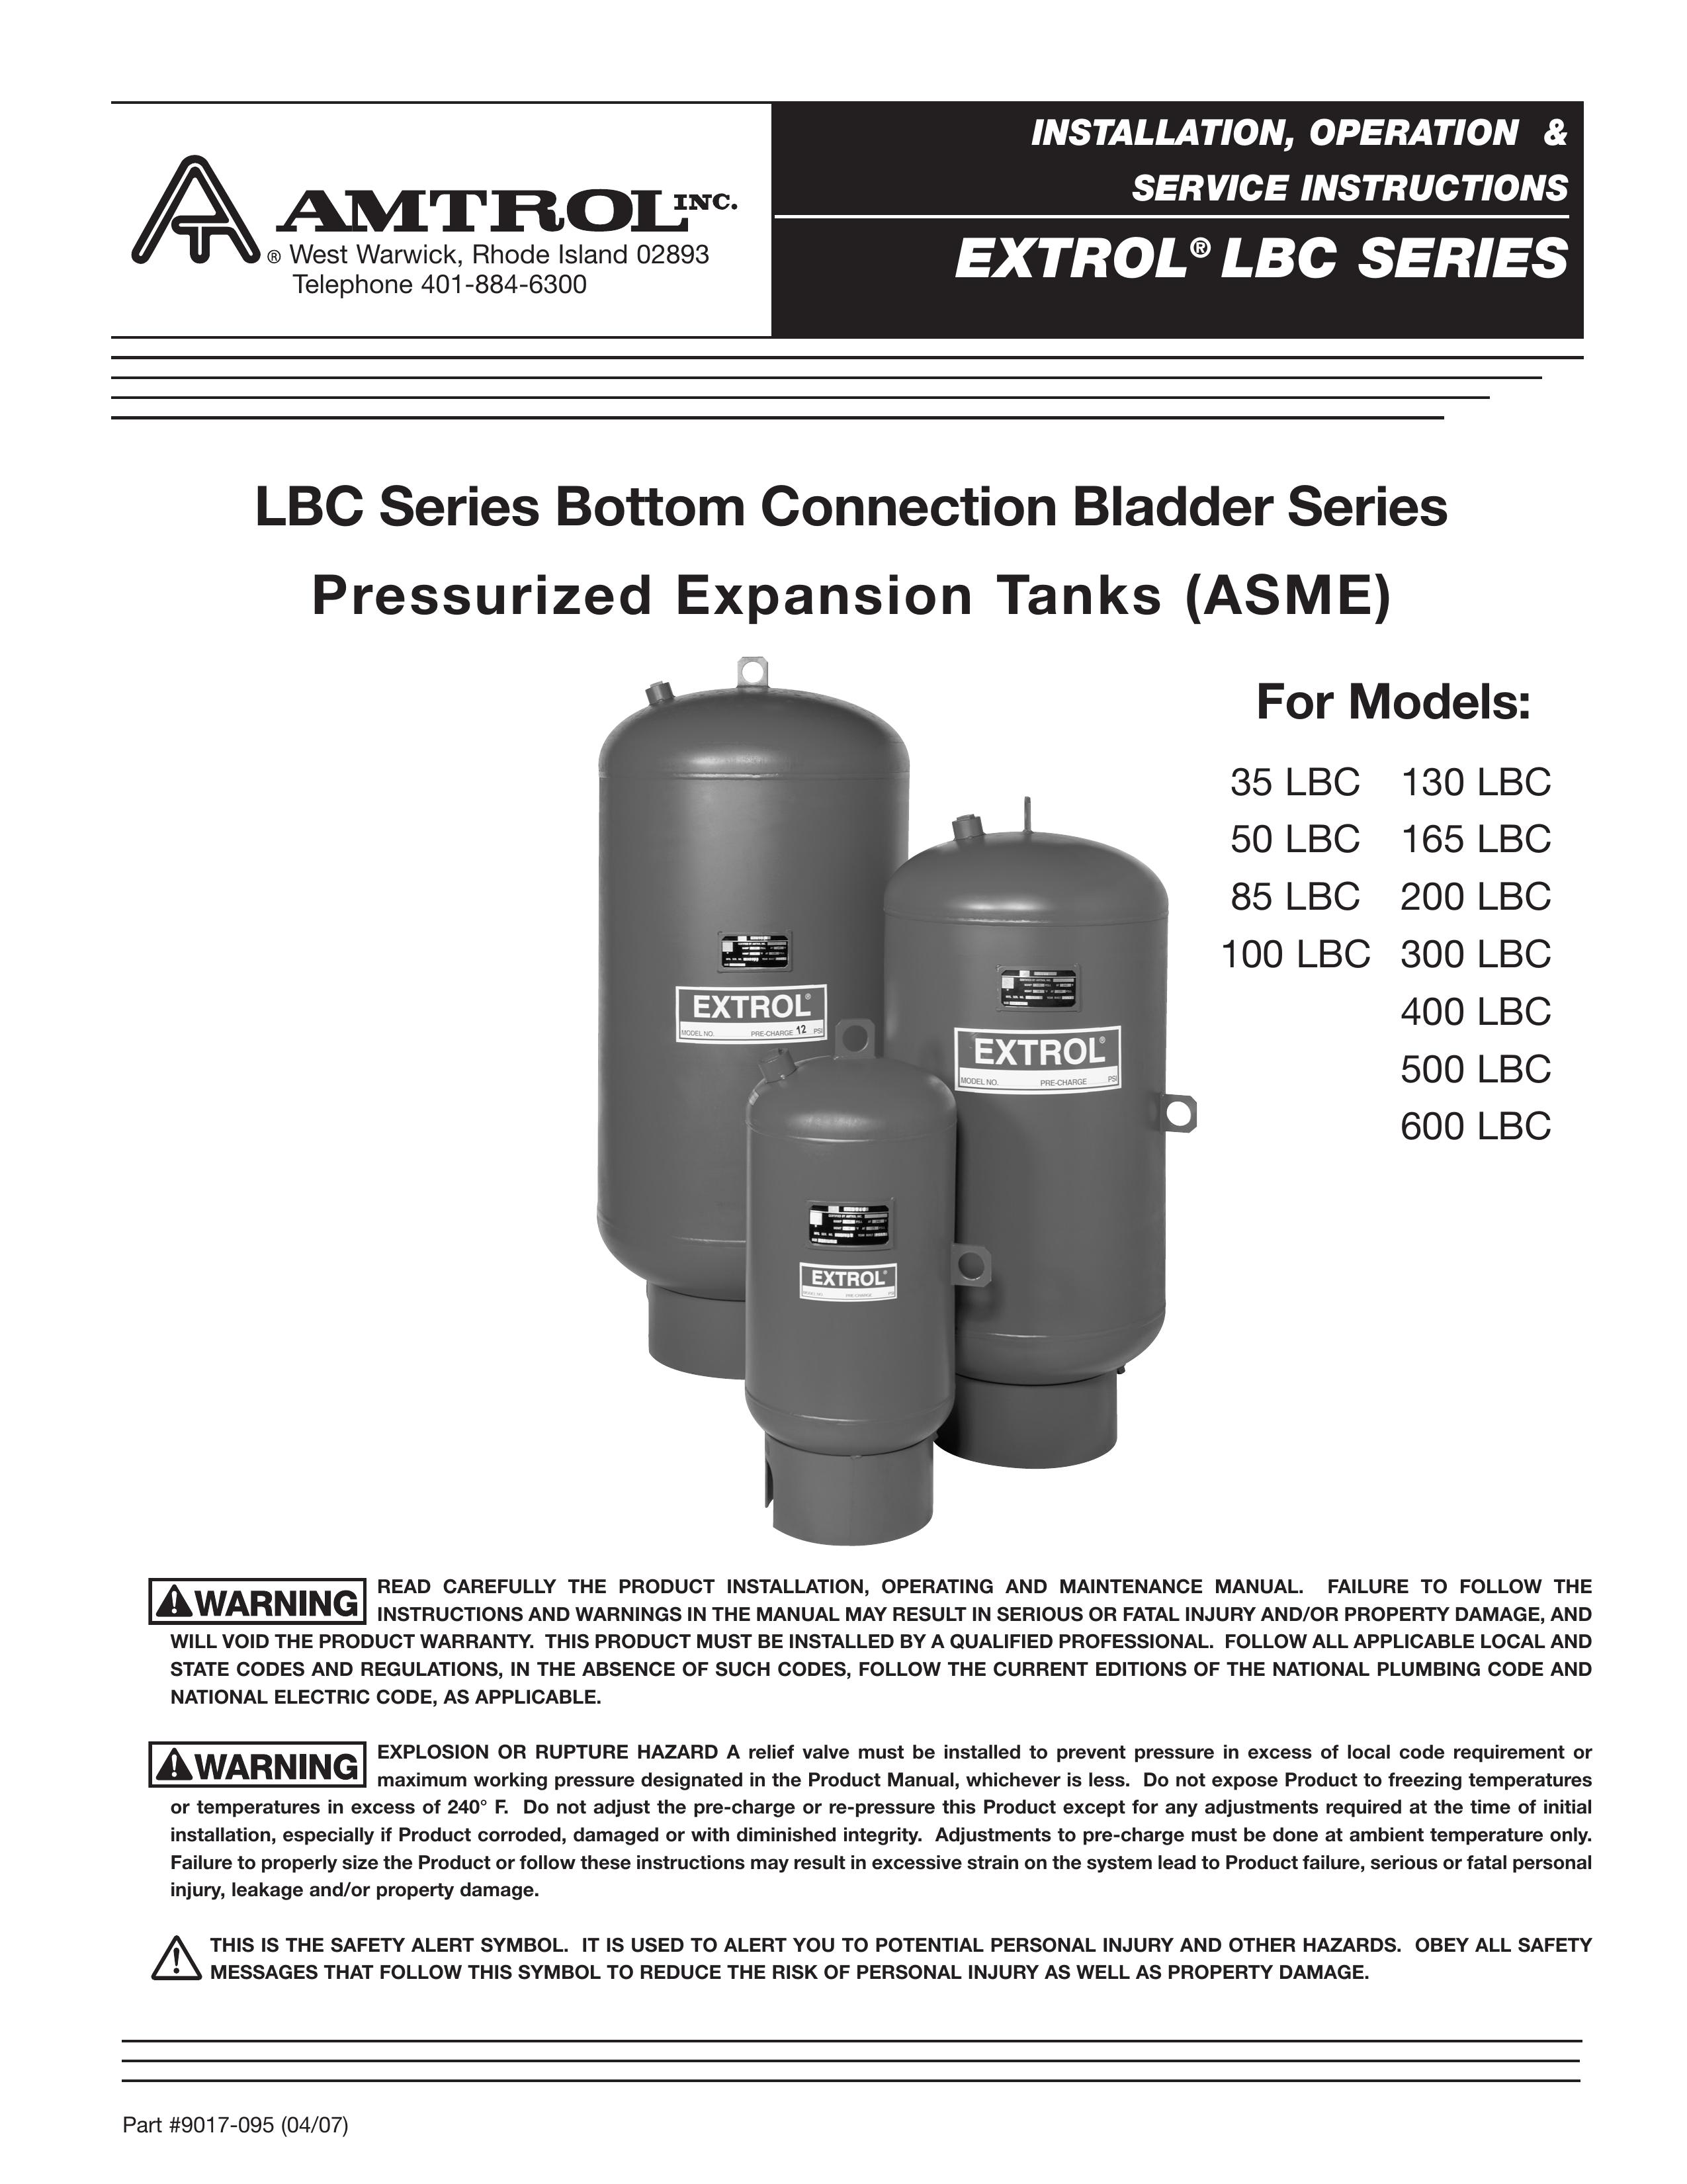 Amtrol 35 LBC Oxygen Equipment User Manual